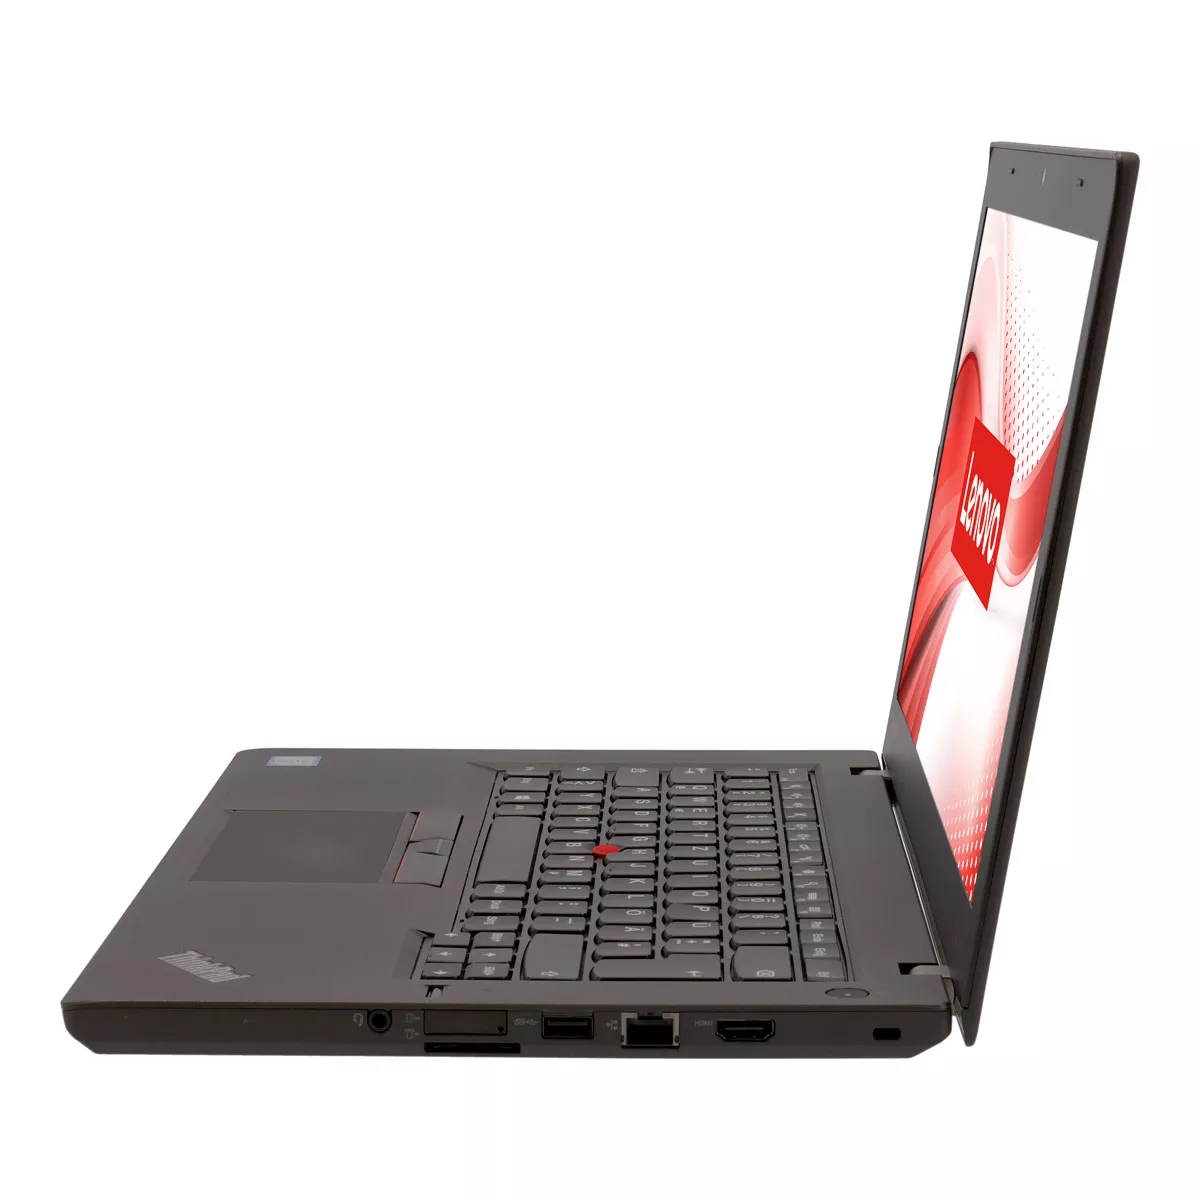 Lenovo ThinkPad T460 Core i5 6300U 2,4 GHz Webcam